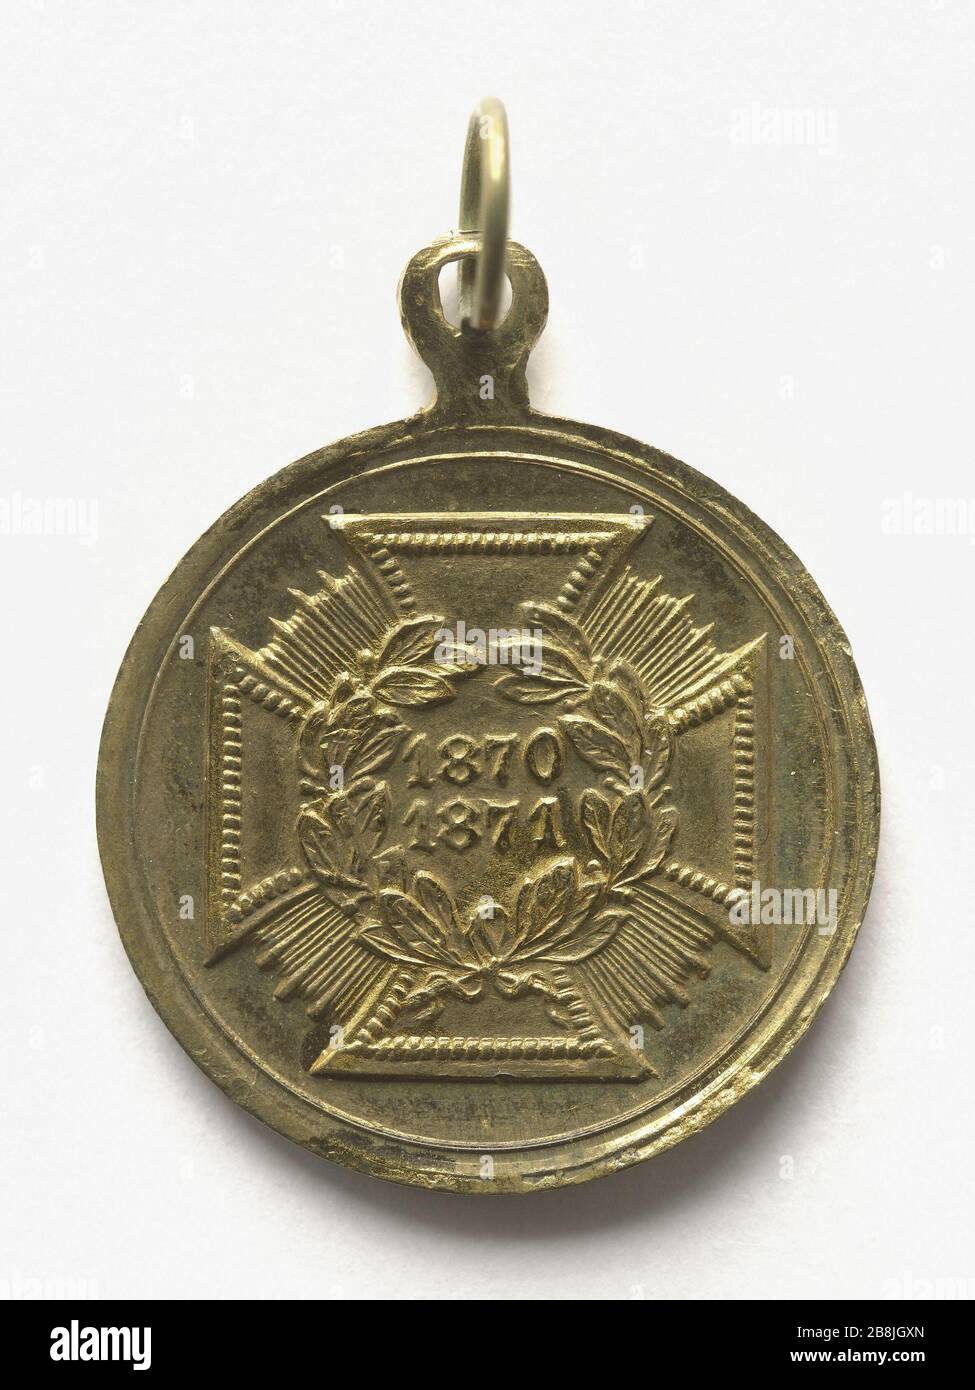 Deutsche Medaille: "Die siegreiche Armee", 1870-1871 (Dummy-Titel) Médaille allemande : "l'armée victorieuse". Cuivre doré, 1871. Paris, musée Carnavalet. Stockfoto